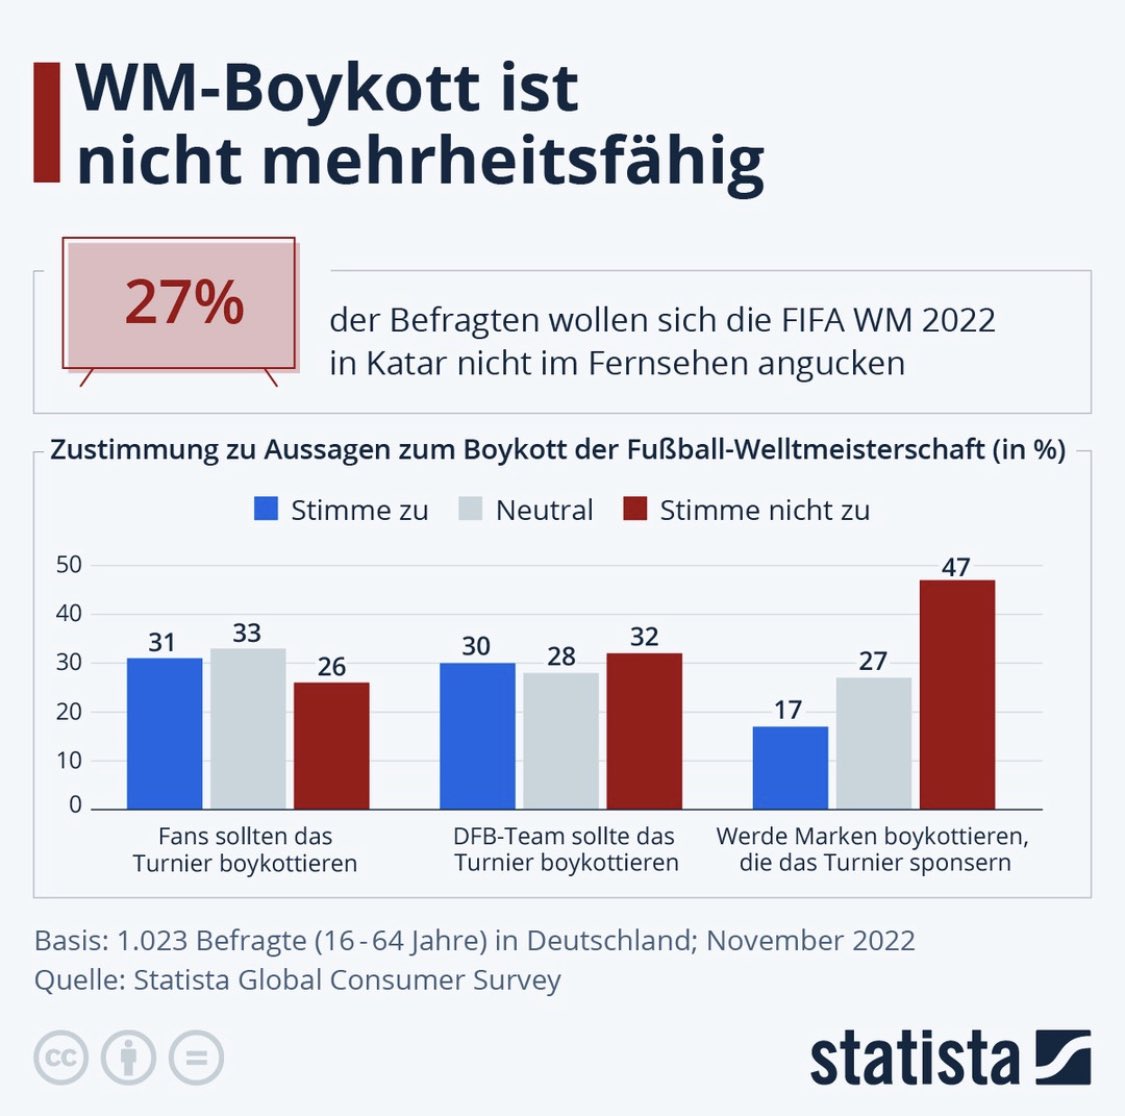 WM Boykott statista - Copy